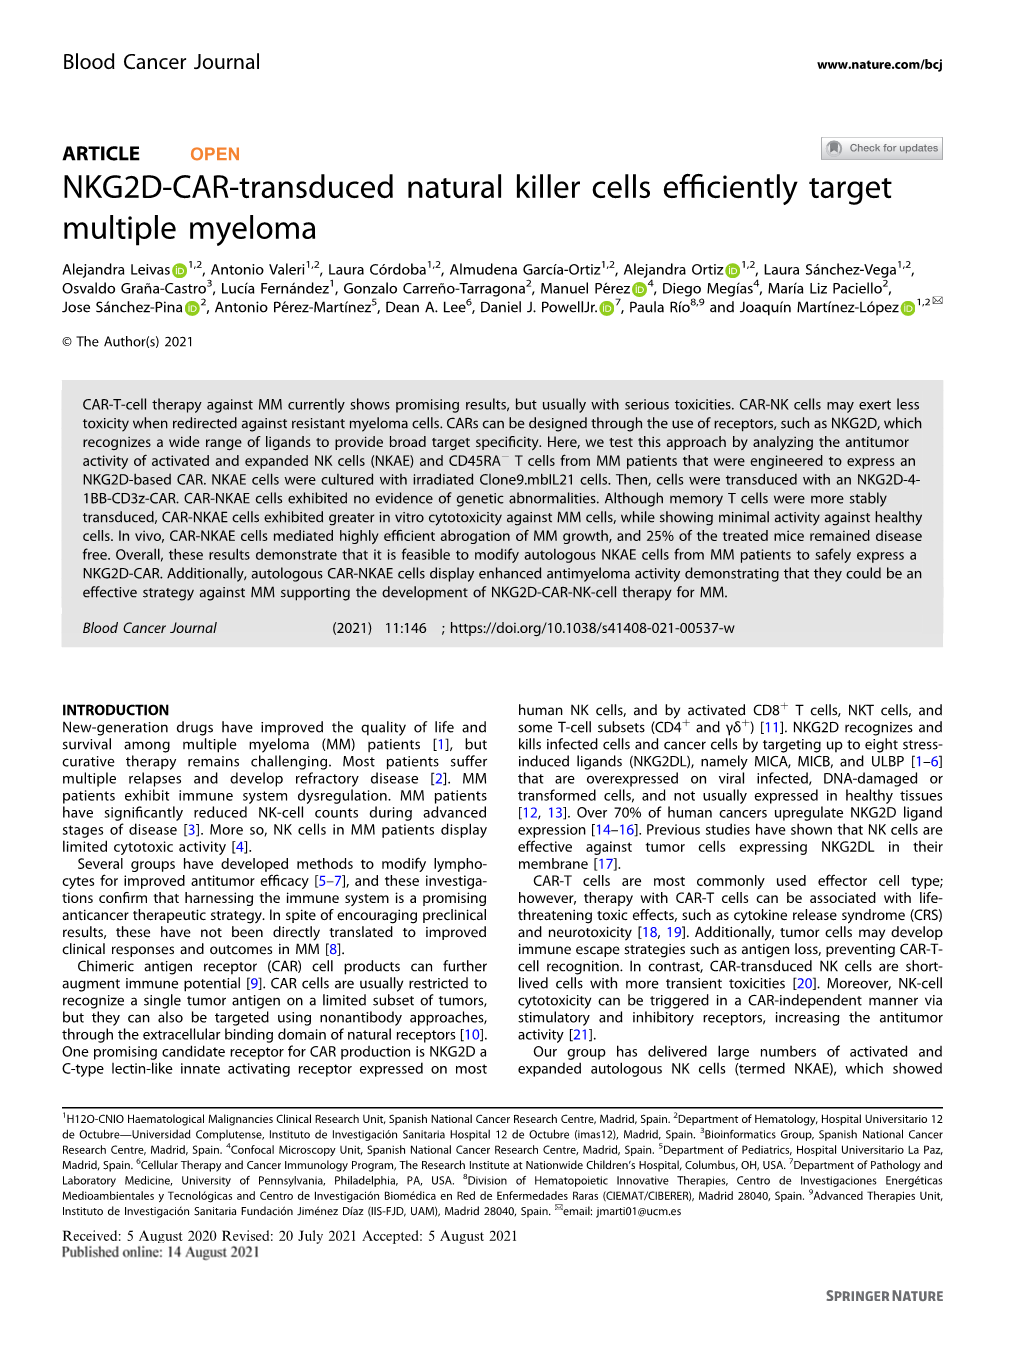 NKG2D-CAR-Transduced Natural Killer Cells Efficiently Target Multiple